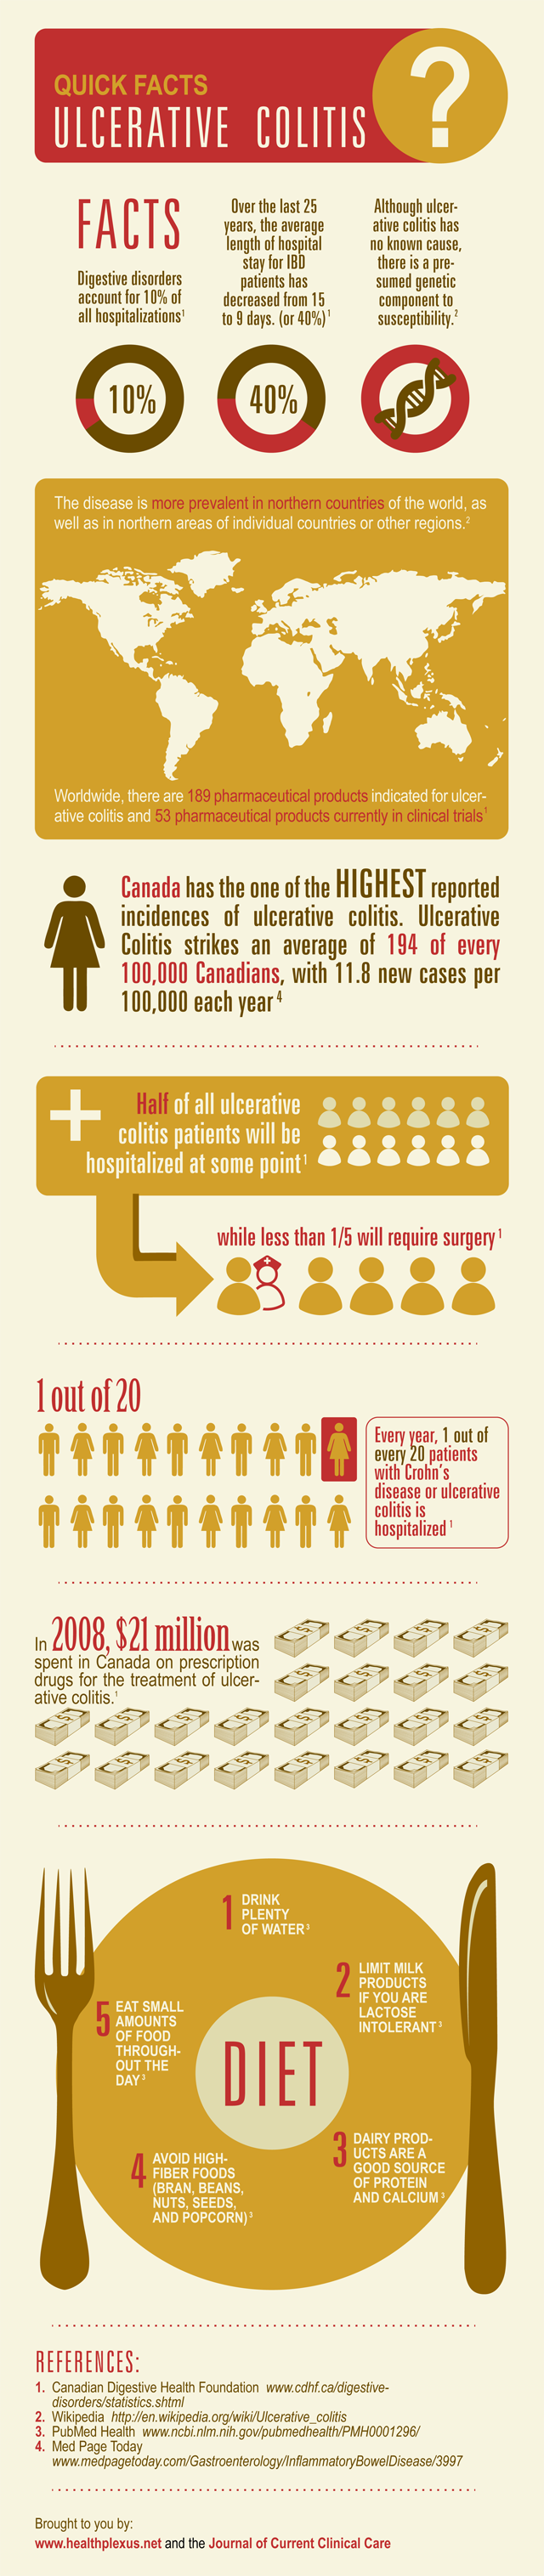 Ulcerative Colitis Facts